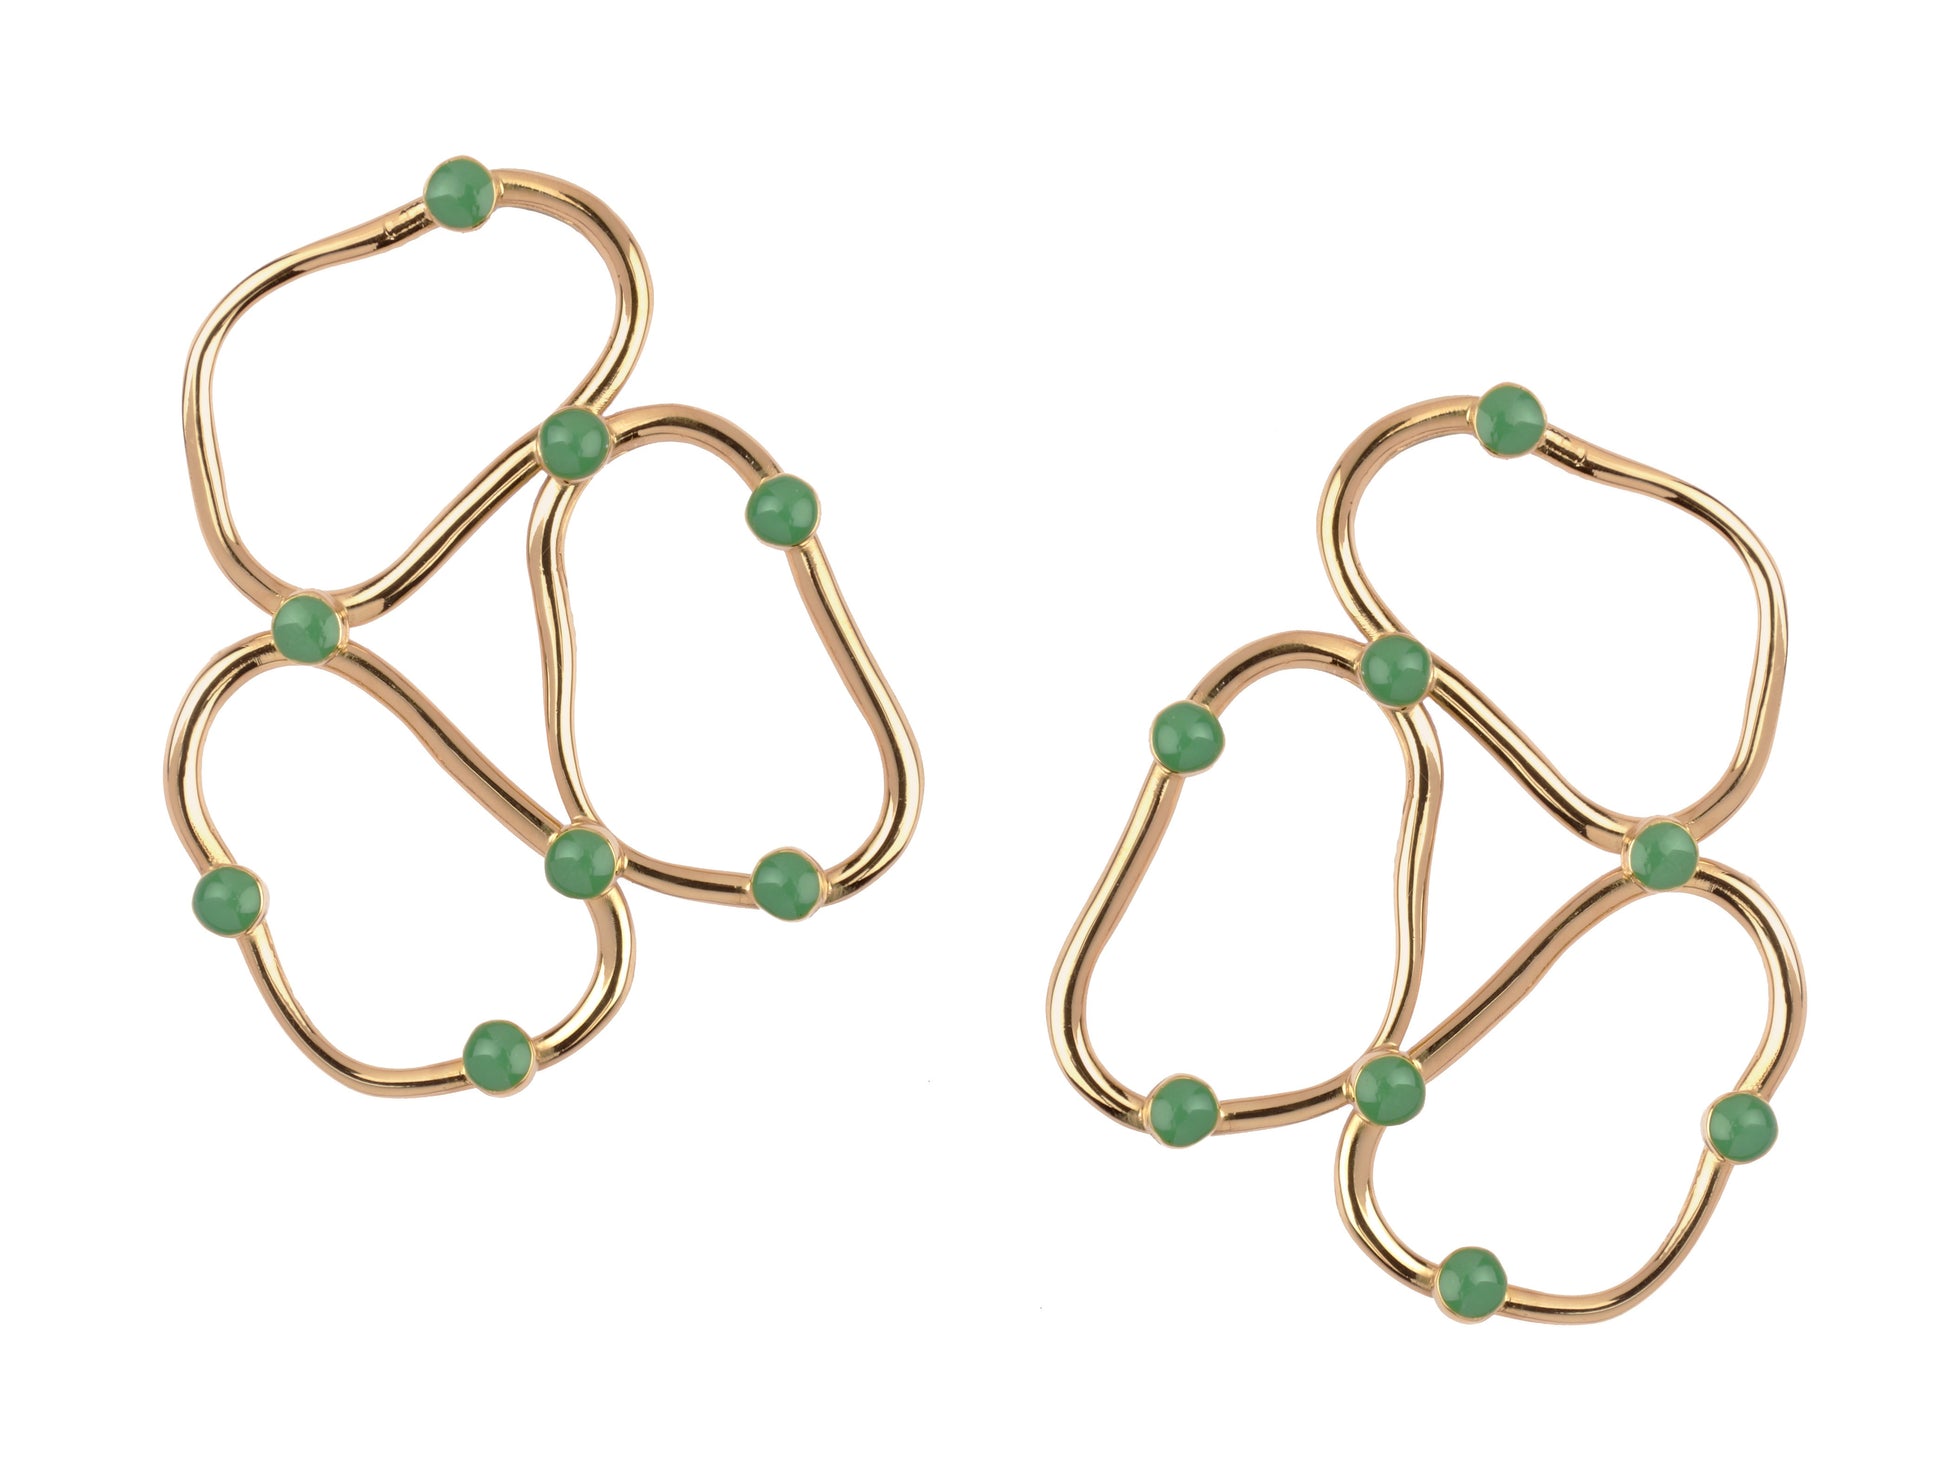 Handmade light gold/green earrings showcasing a unique geometric pattern.